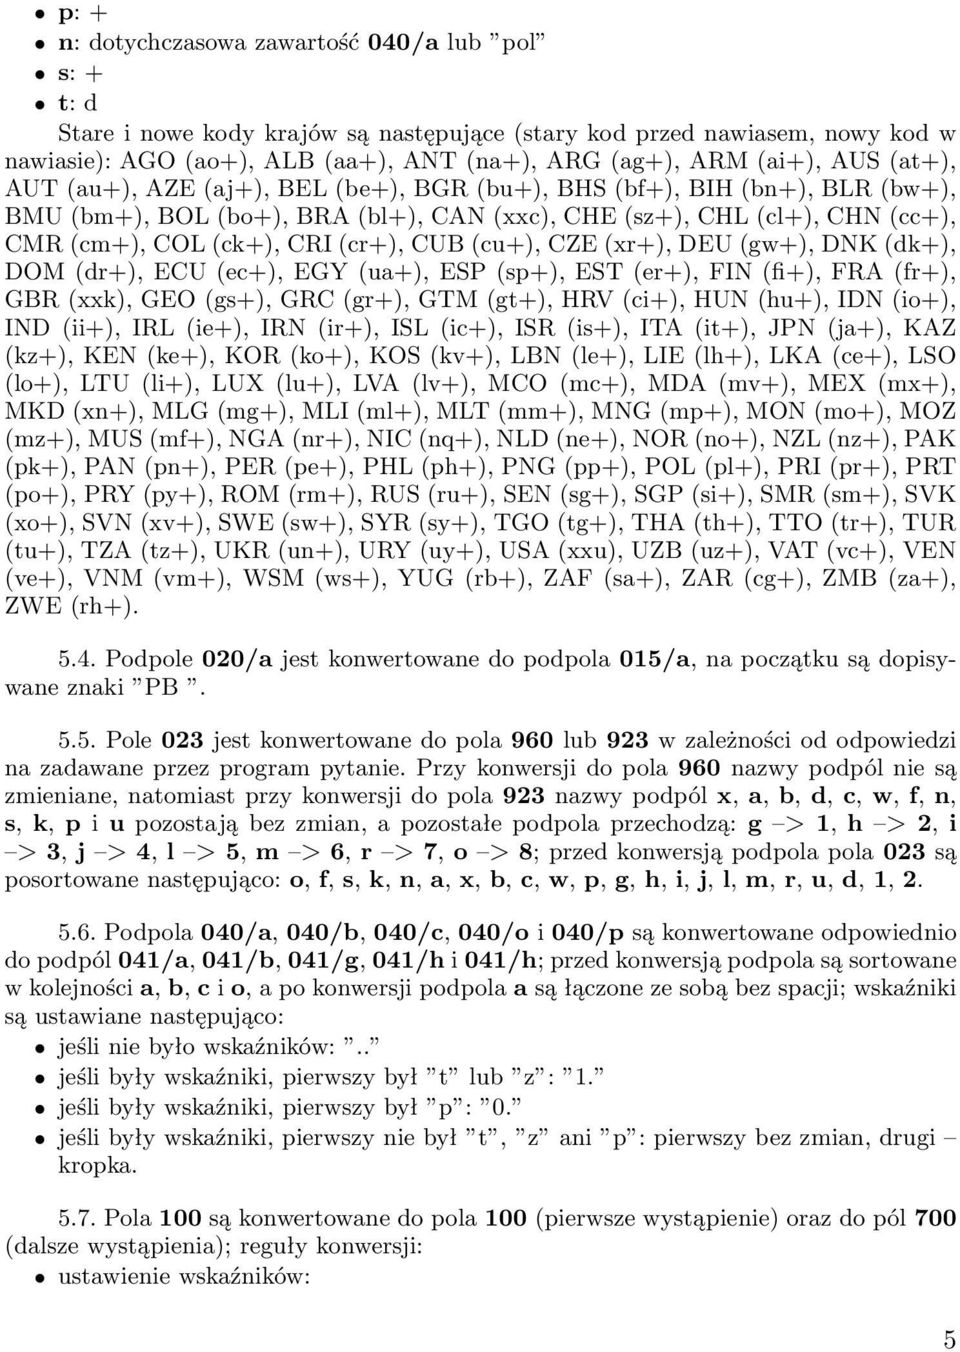 CUB (cu+), CZE (xr+), DEU (gw+), DNK (dk+), DOM (dr+), ECU (ec+), EGY (ua+), ESP (sp+), EST (er+), FIN (fi+), FRA (fr+), GBR (xxk), GEO (gs+), GRC (gr+), GTM (gt+), HRV (ci+), HUN (hu+), IDN (io+),